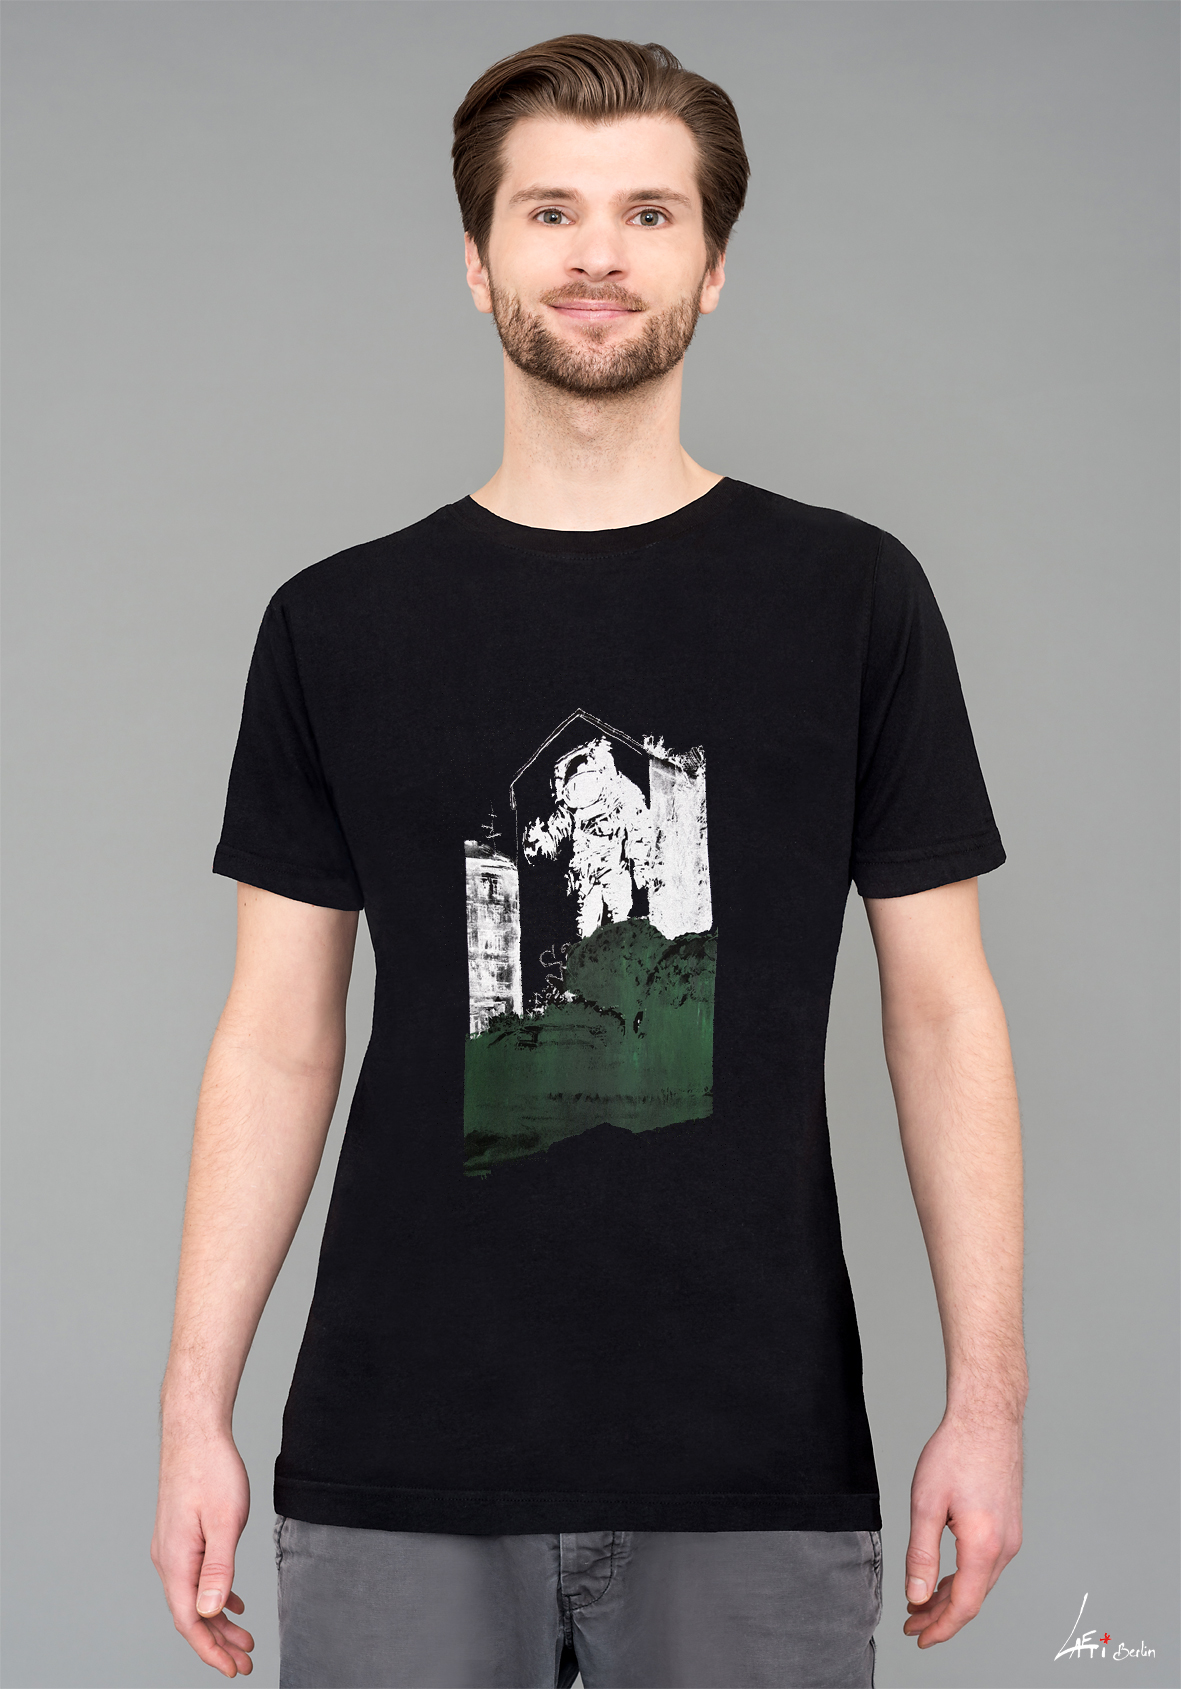 T-shirt Black - Man - Astronaut/Kosmonaut